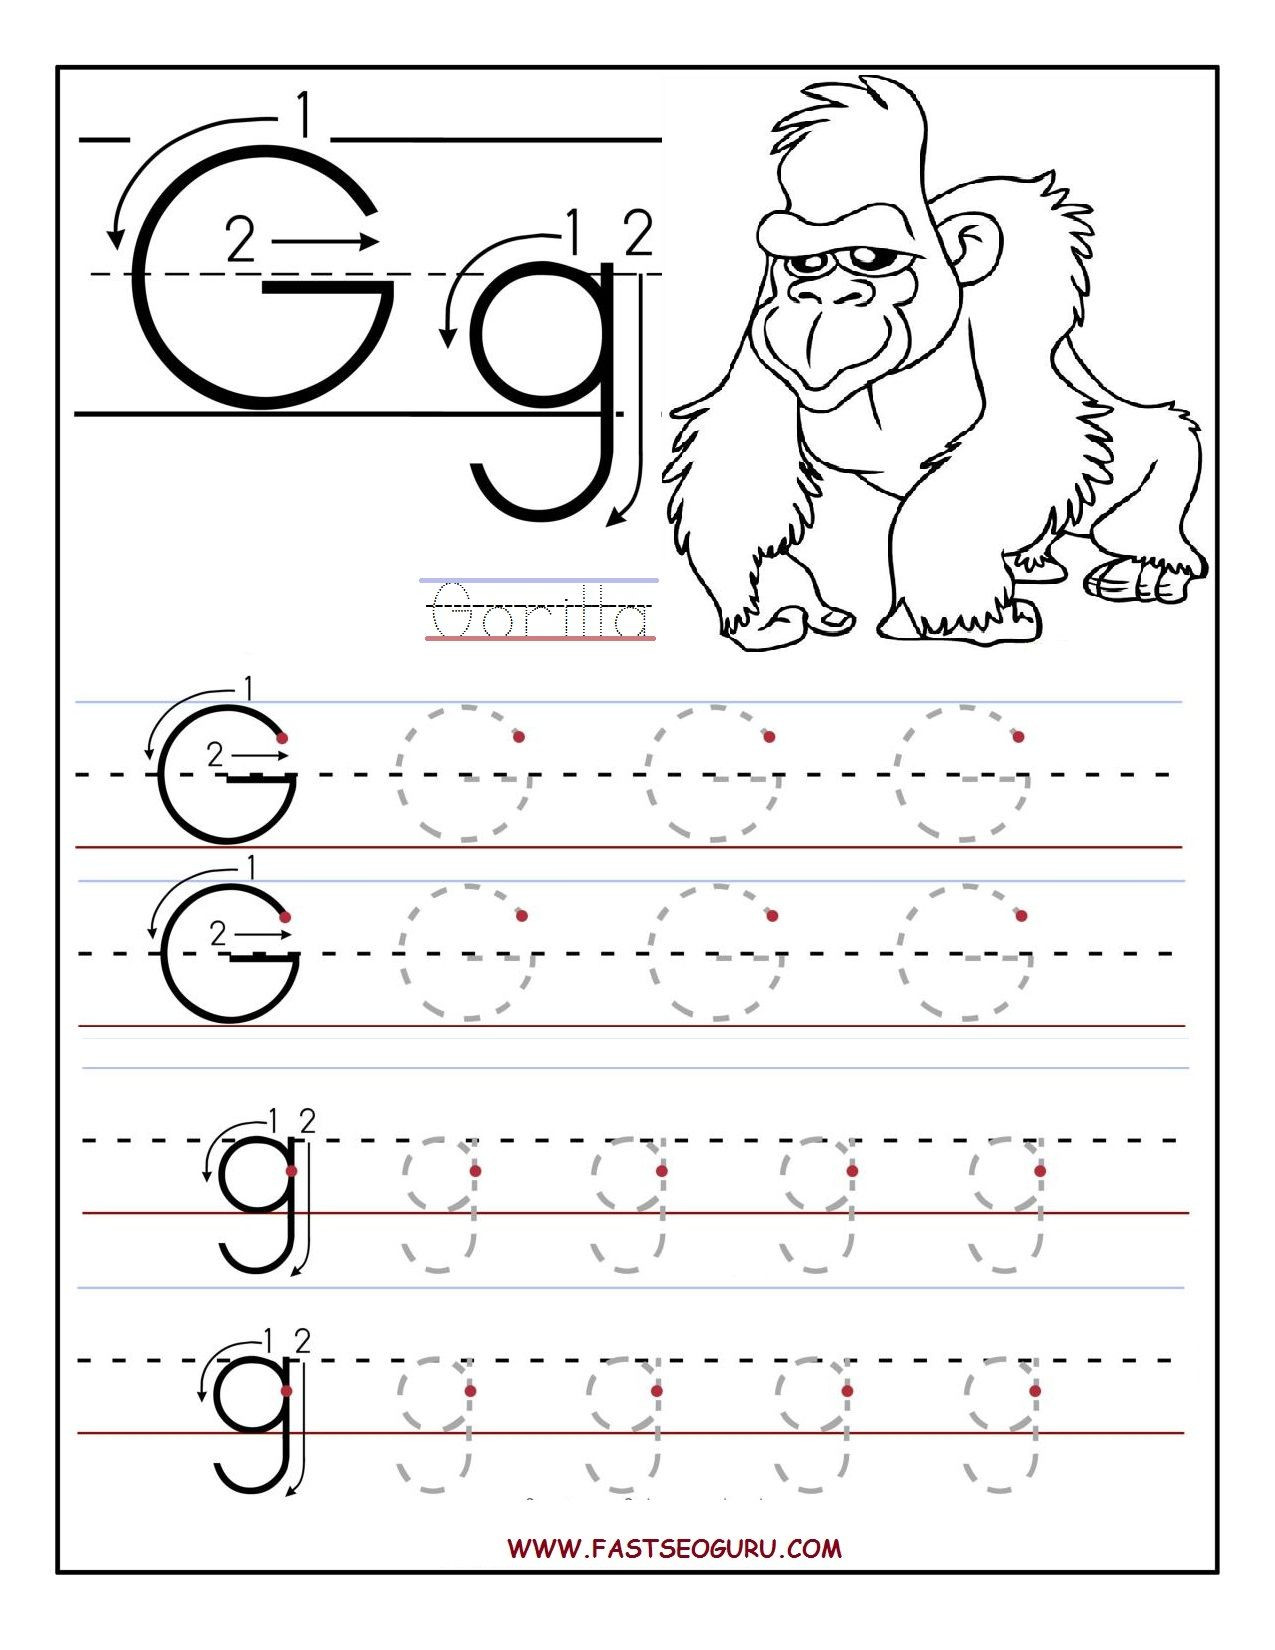 Letter G Tracing Worksheets Preschool Worksheets for Preschoolers